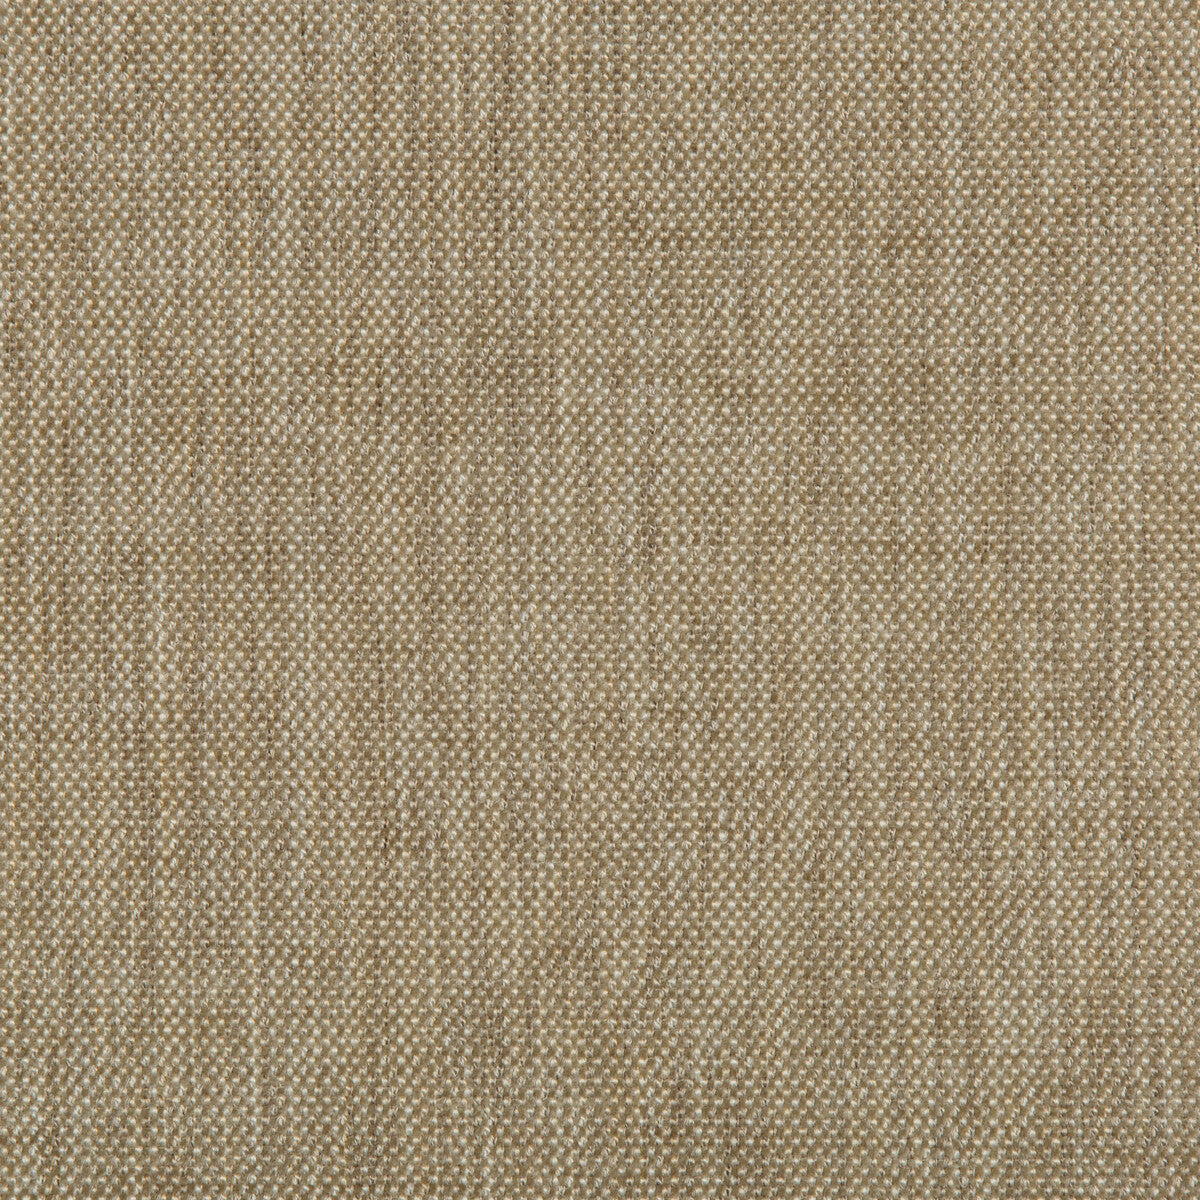 Kravet Smart fabric in 33577-16 color - pattern 33577.16.0 - by Kravet Smart